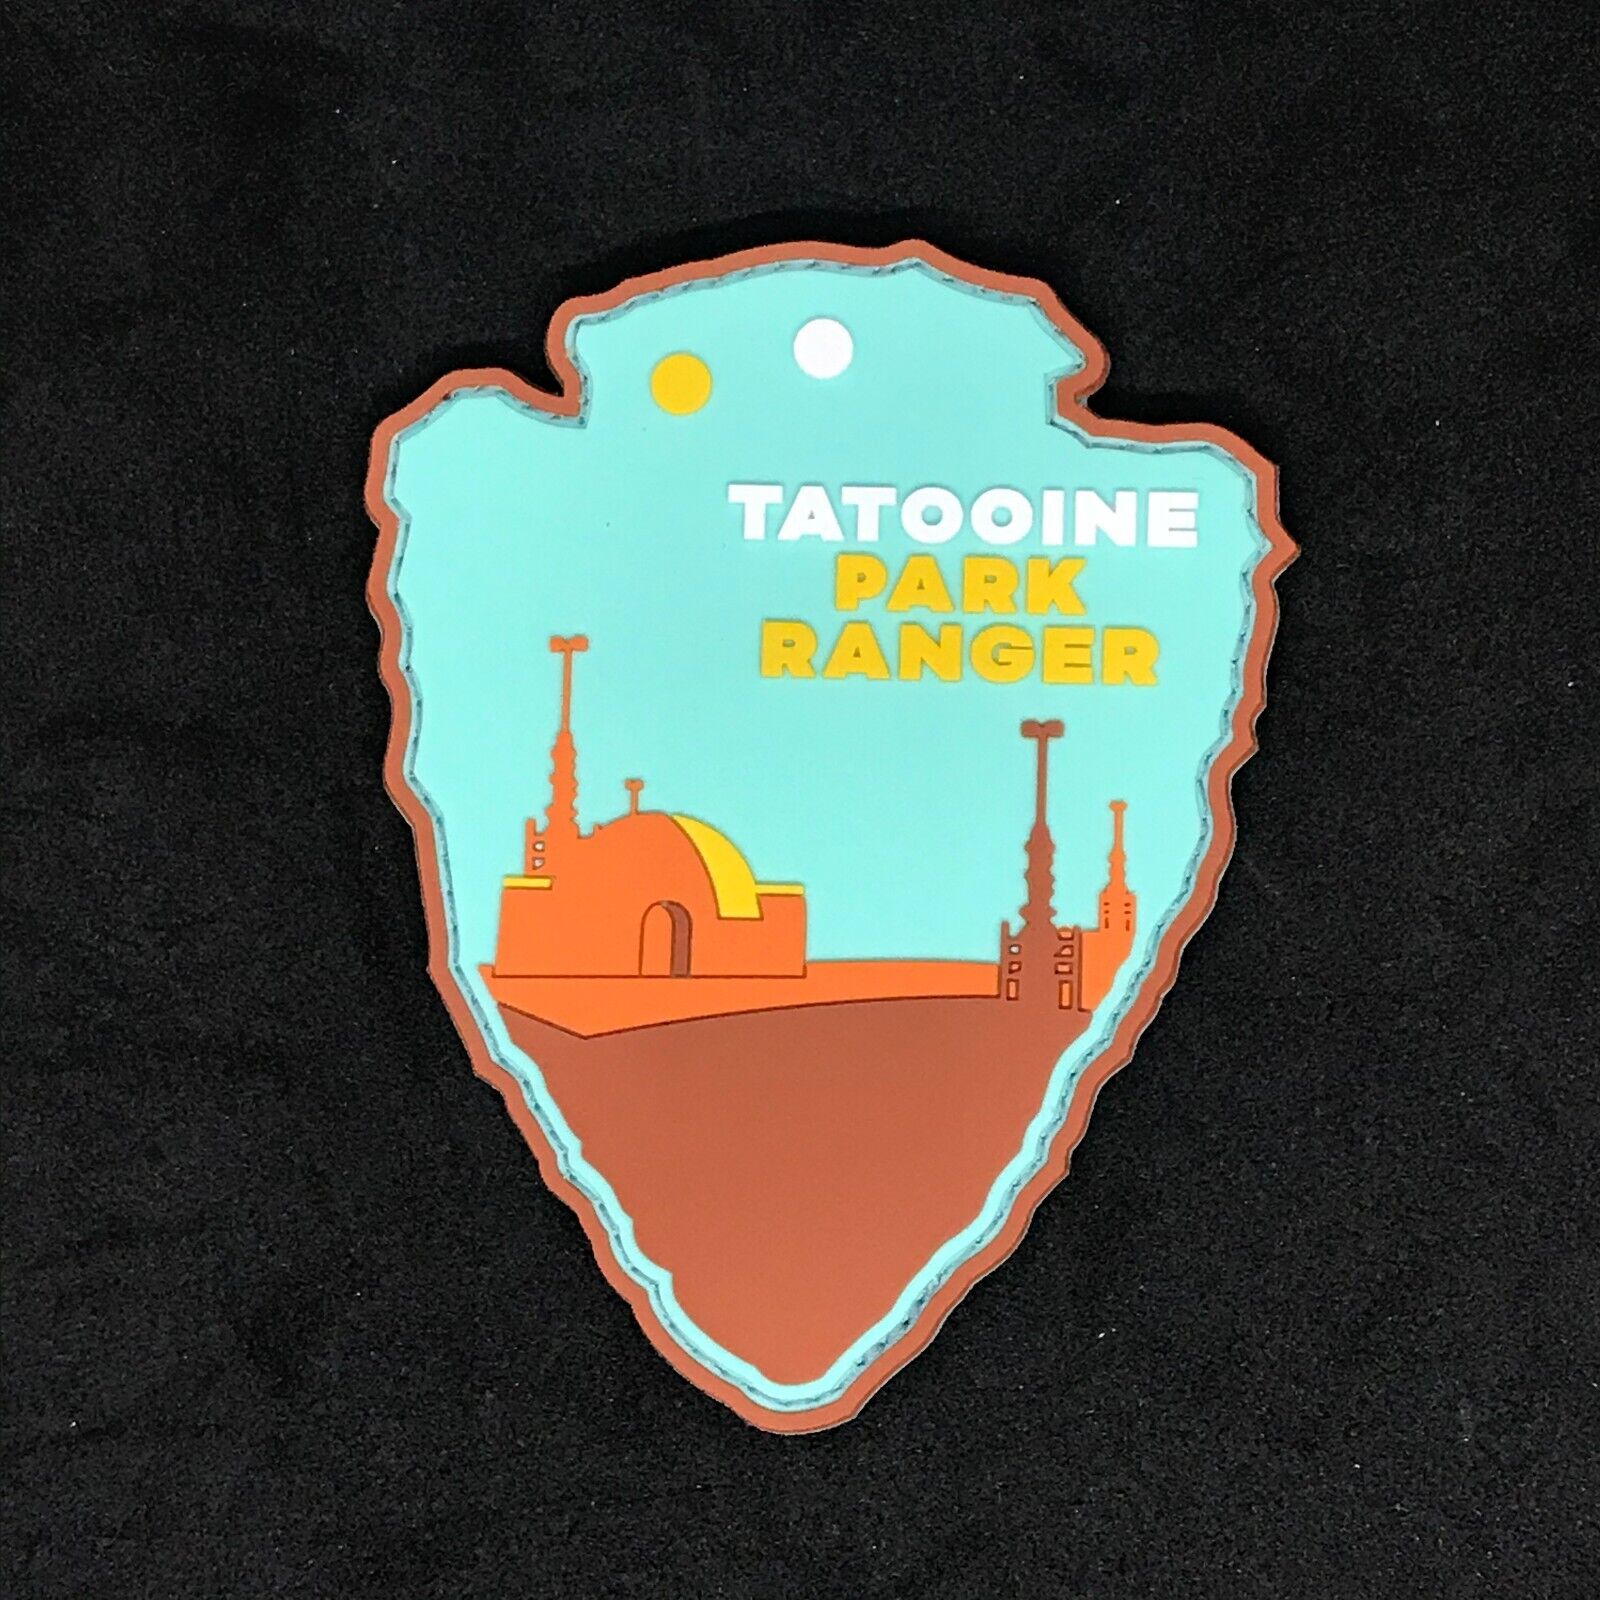 Star Wars, Tatooine National Park Ranger Patch, 3D PVC Rubber